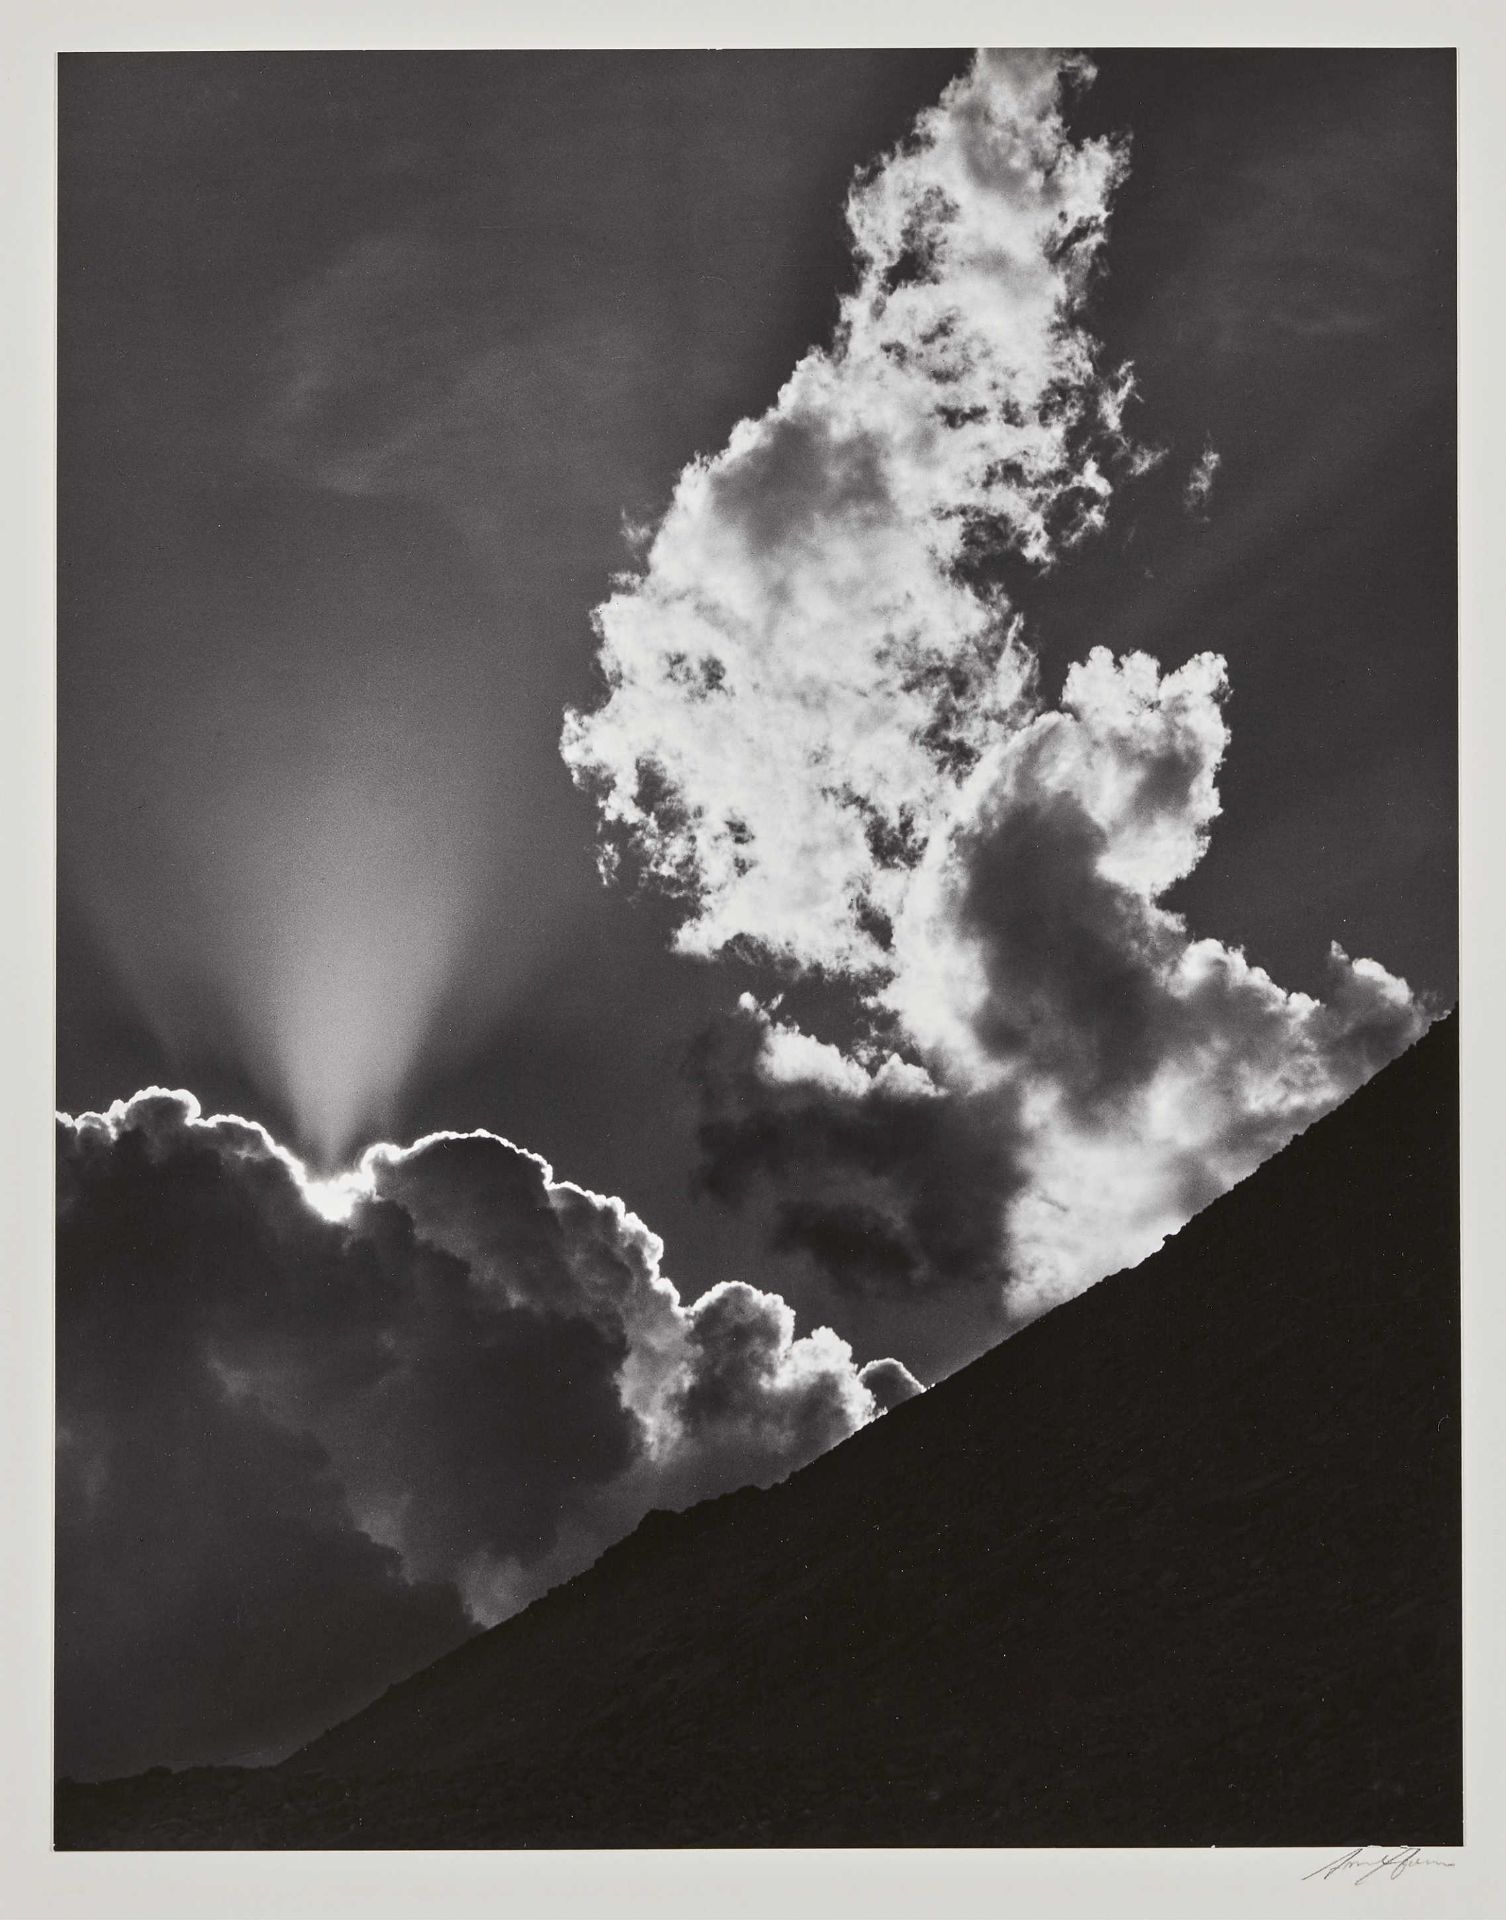 ADAMS, ANSELSan Francisco 1902 - 1984 CarmelCloud, Sierra Nevada, 1936.Silbergelatineabzug, a.